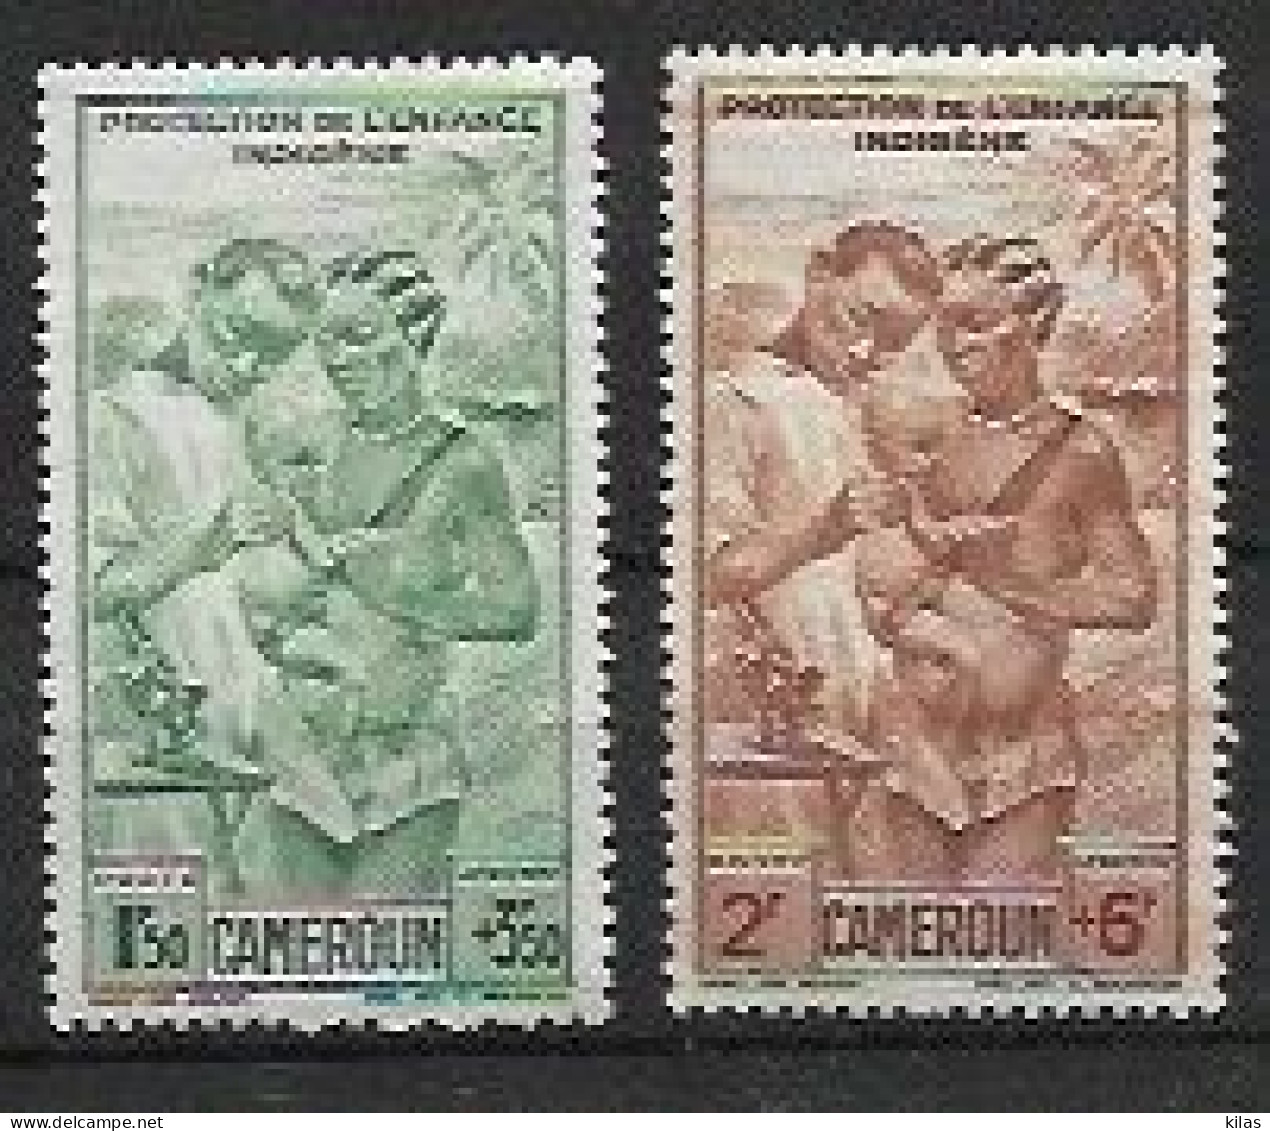 CAMEROON 1942 Protection De L'Enfance Indigène & Quinzaine Impériale (PEIQI) MNH - 1942 Protection De L'Enfance Indigène & Quinzaine Impériale (PEIQI)